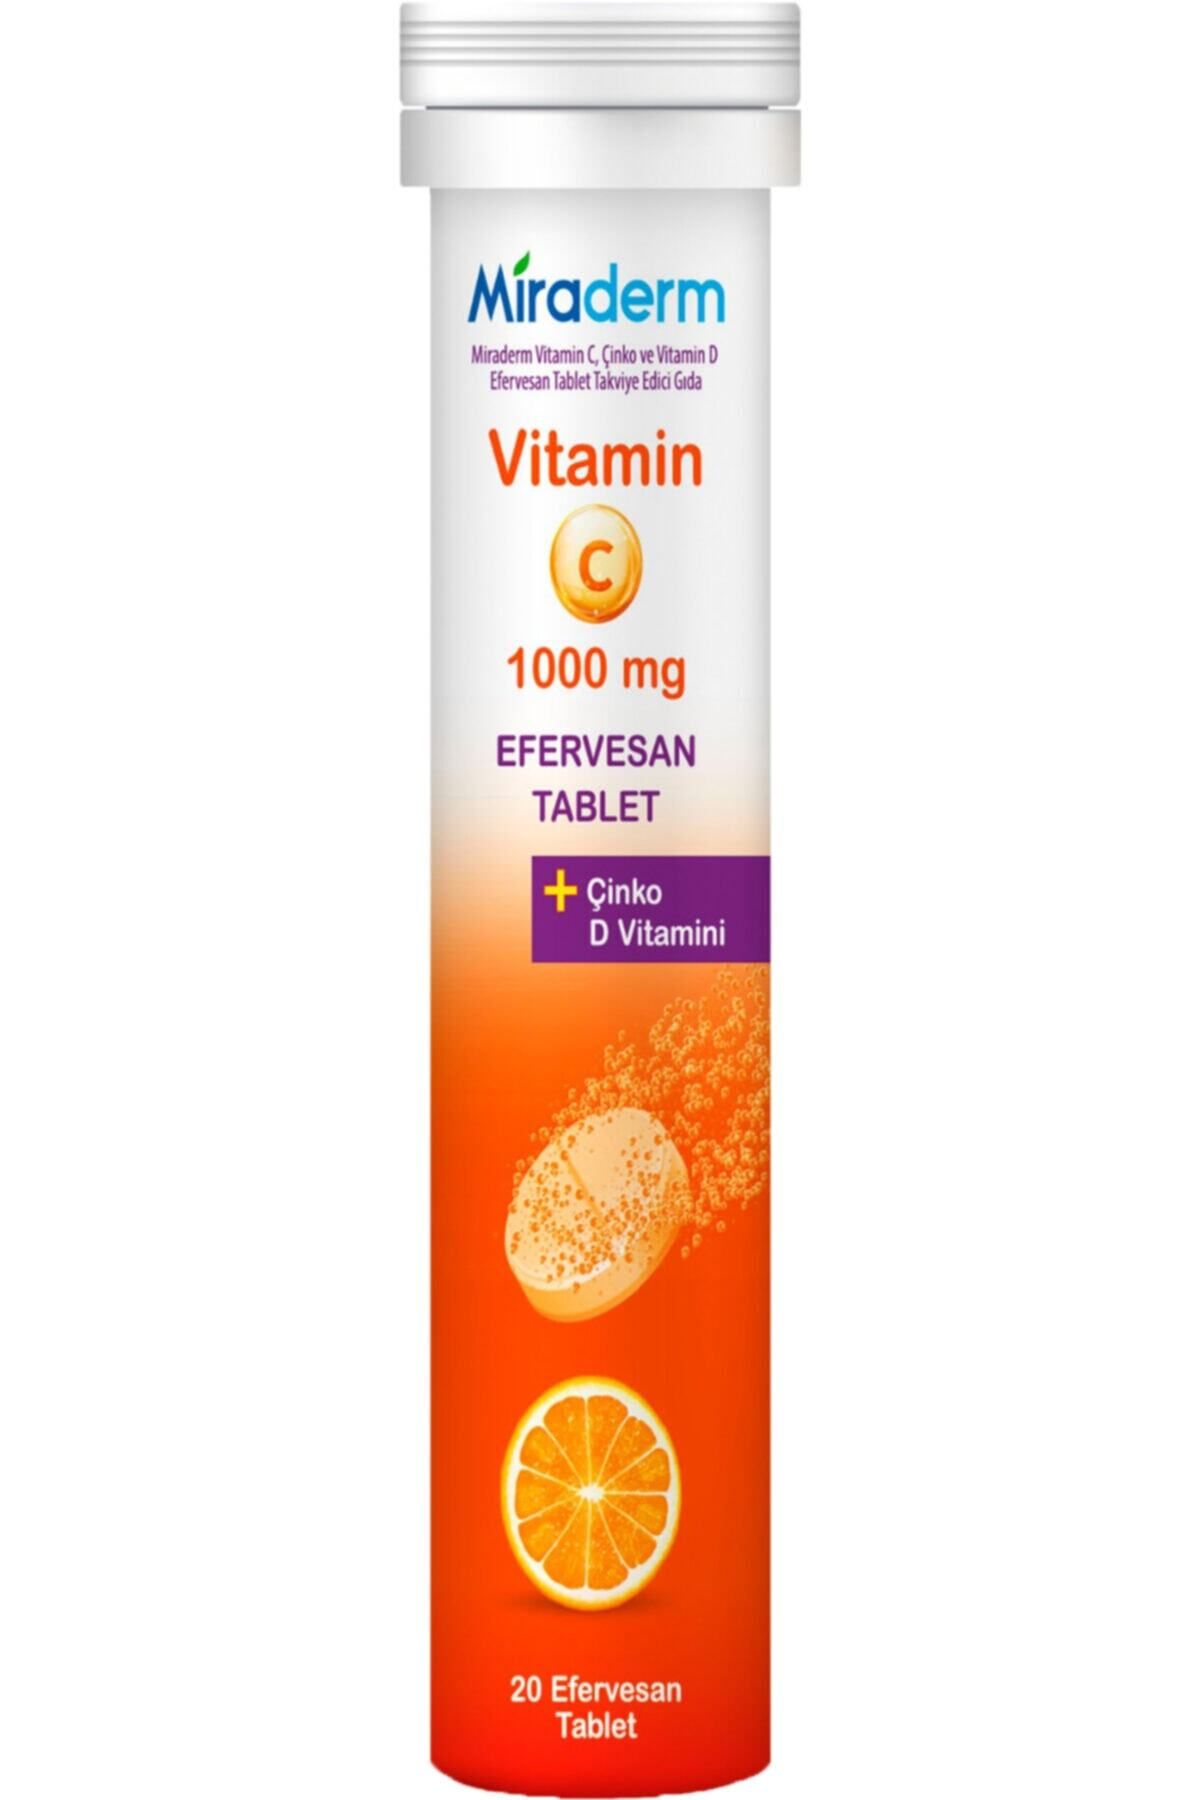 Miraderm C Vitamini 3 Lü Etki 1000 Mg 20 Efervesan